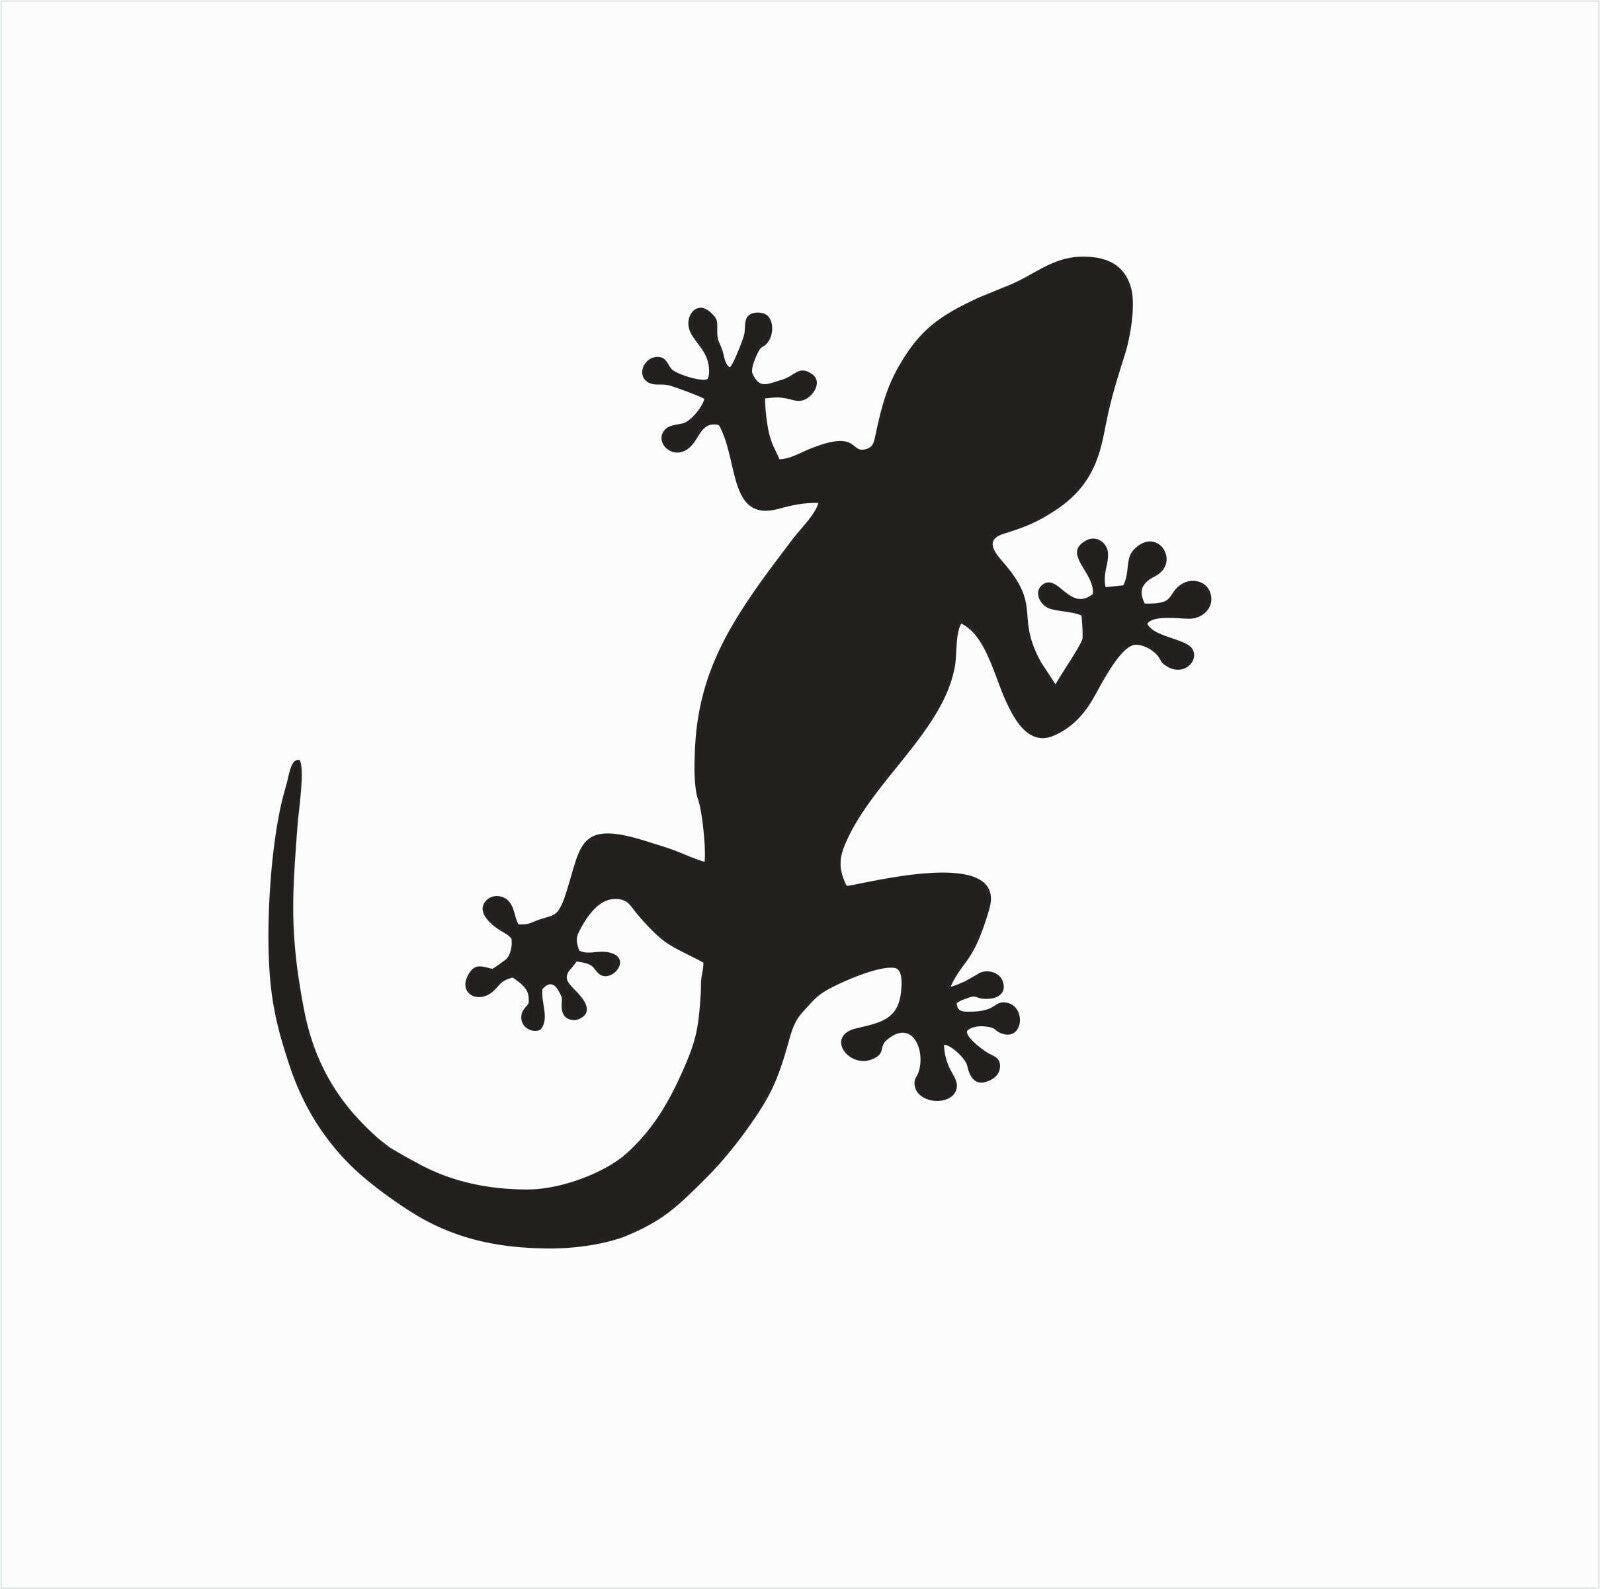 Gecko Lizard Reptile Animal Vinyl Die Cut Car Decal Sticker